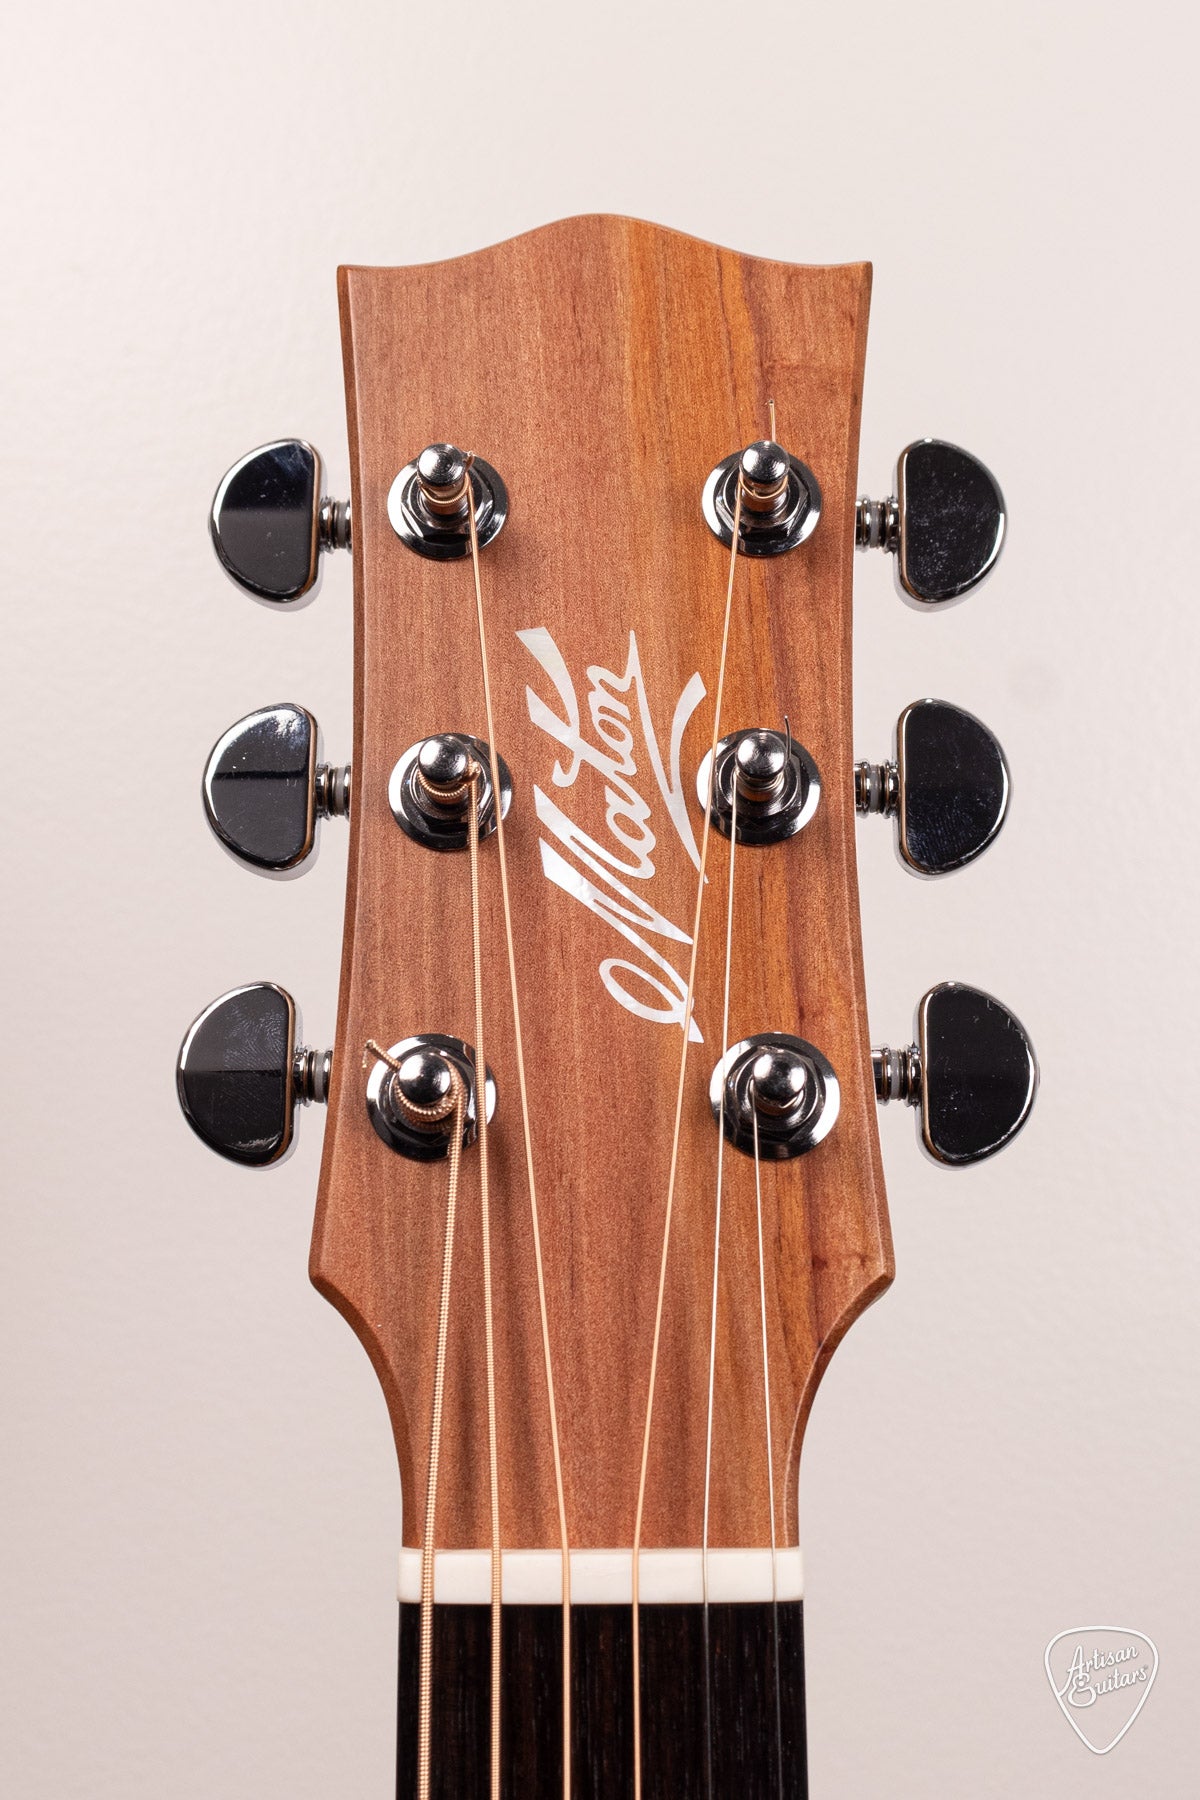 Maton Guitars 808C Joe Robinson Signature Cutaway - 16616